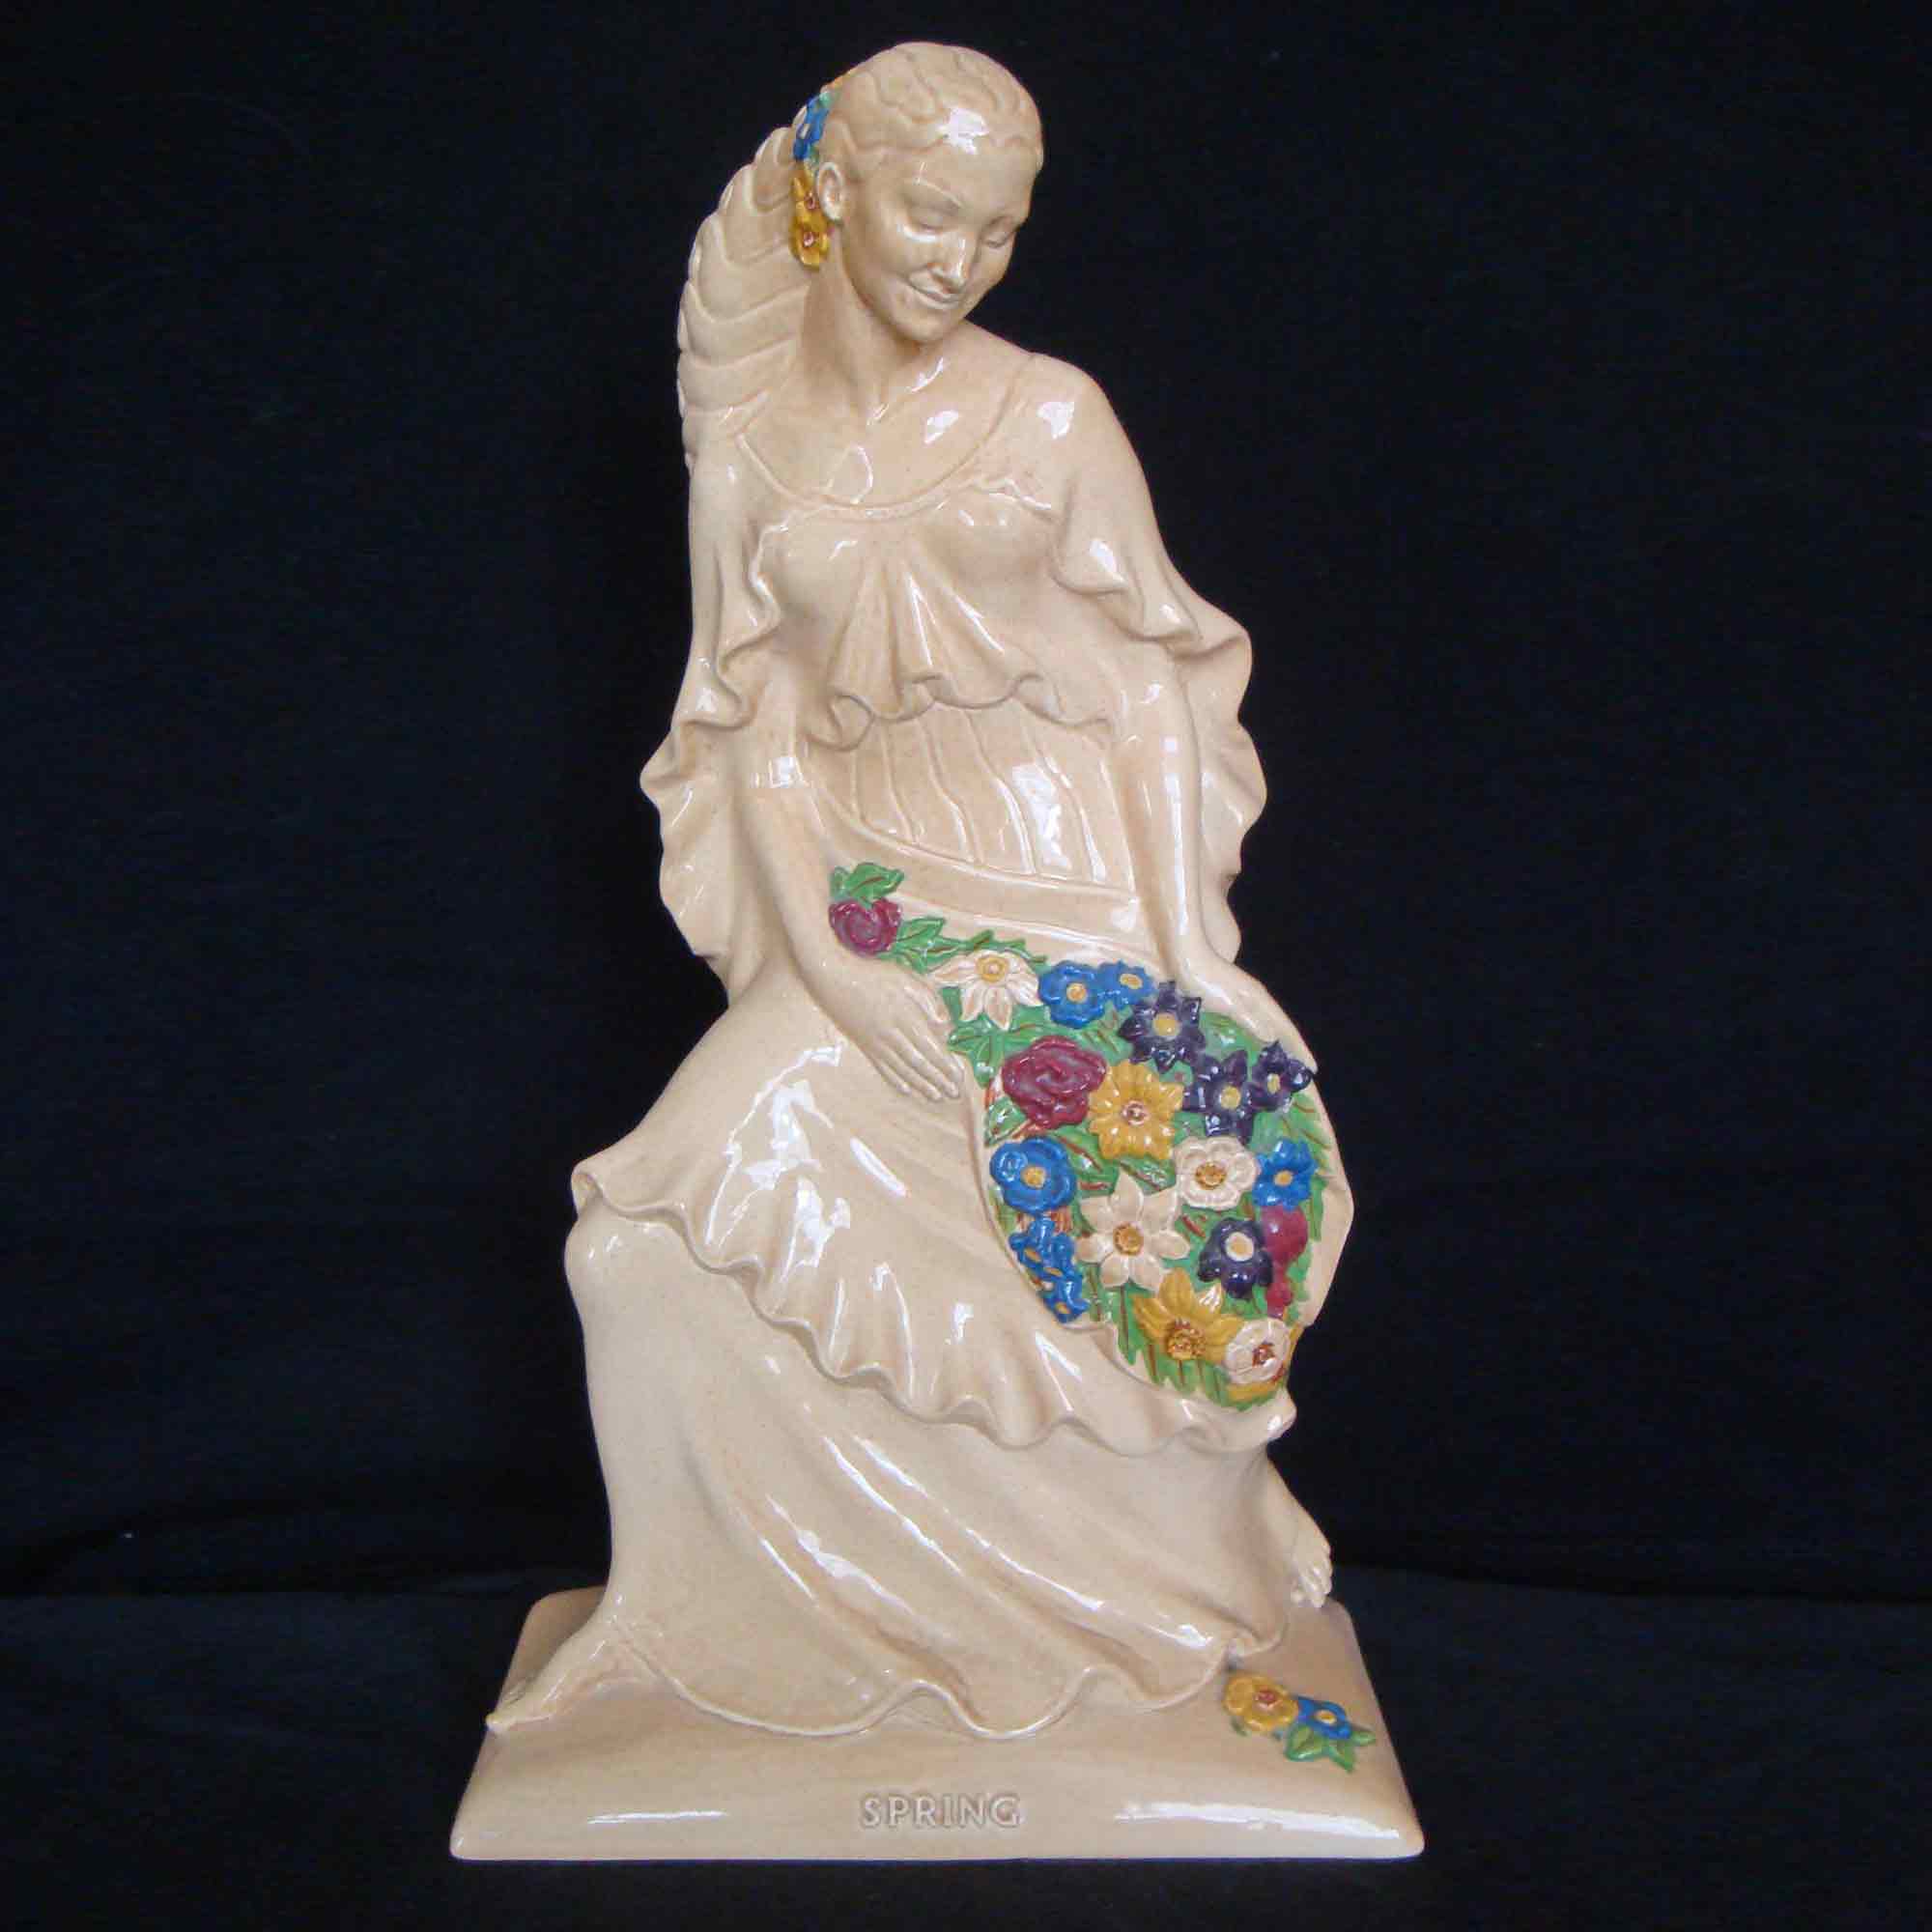 Ashtead Potters M103 'Spring' Figurine